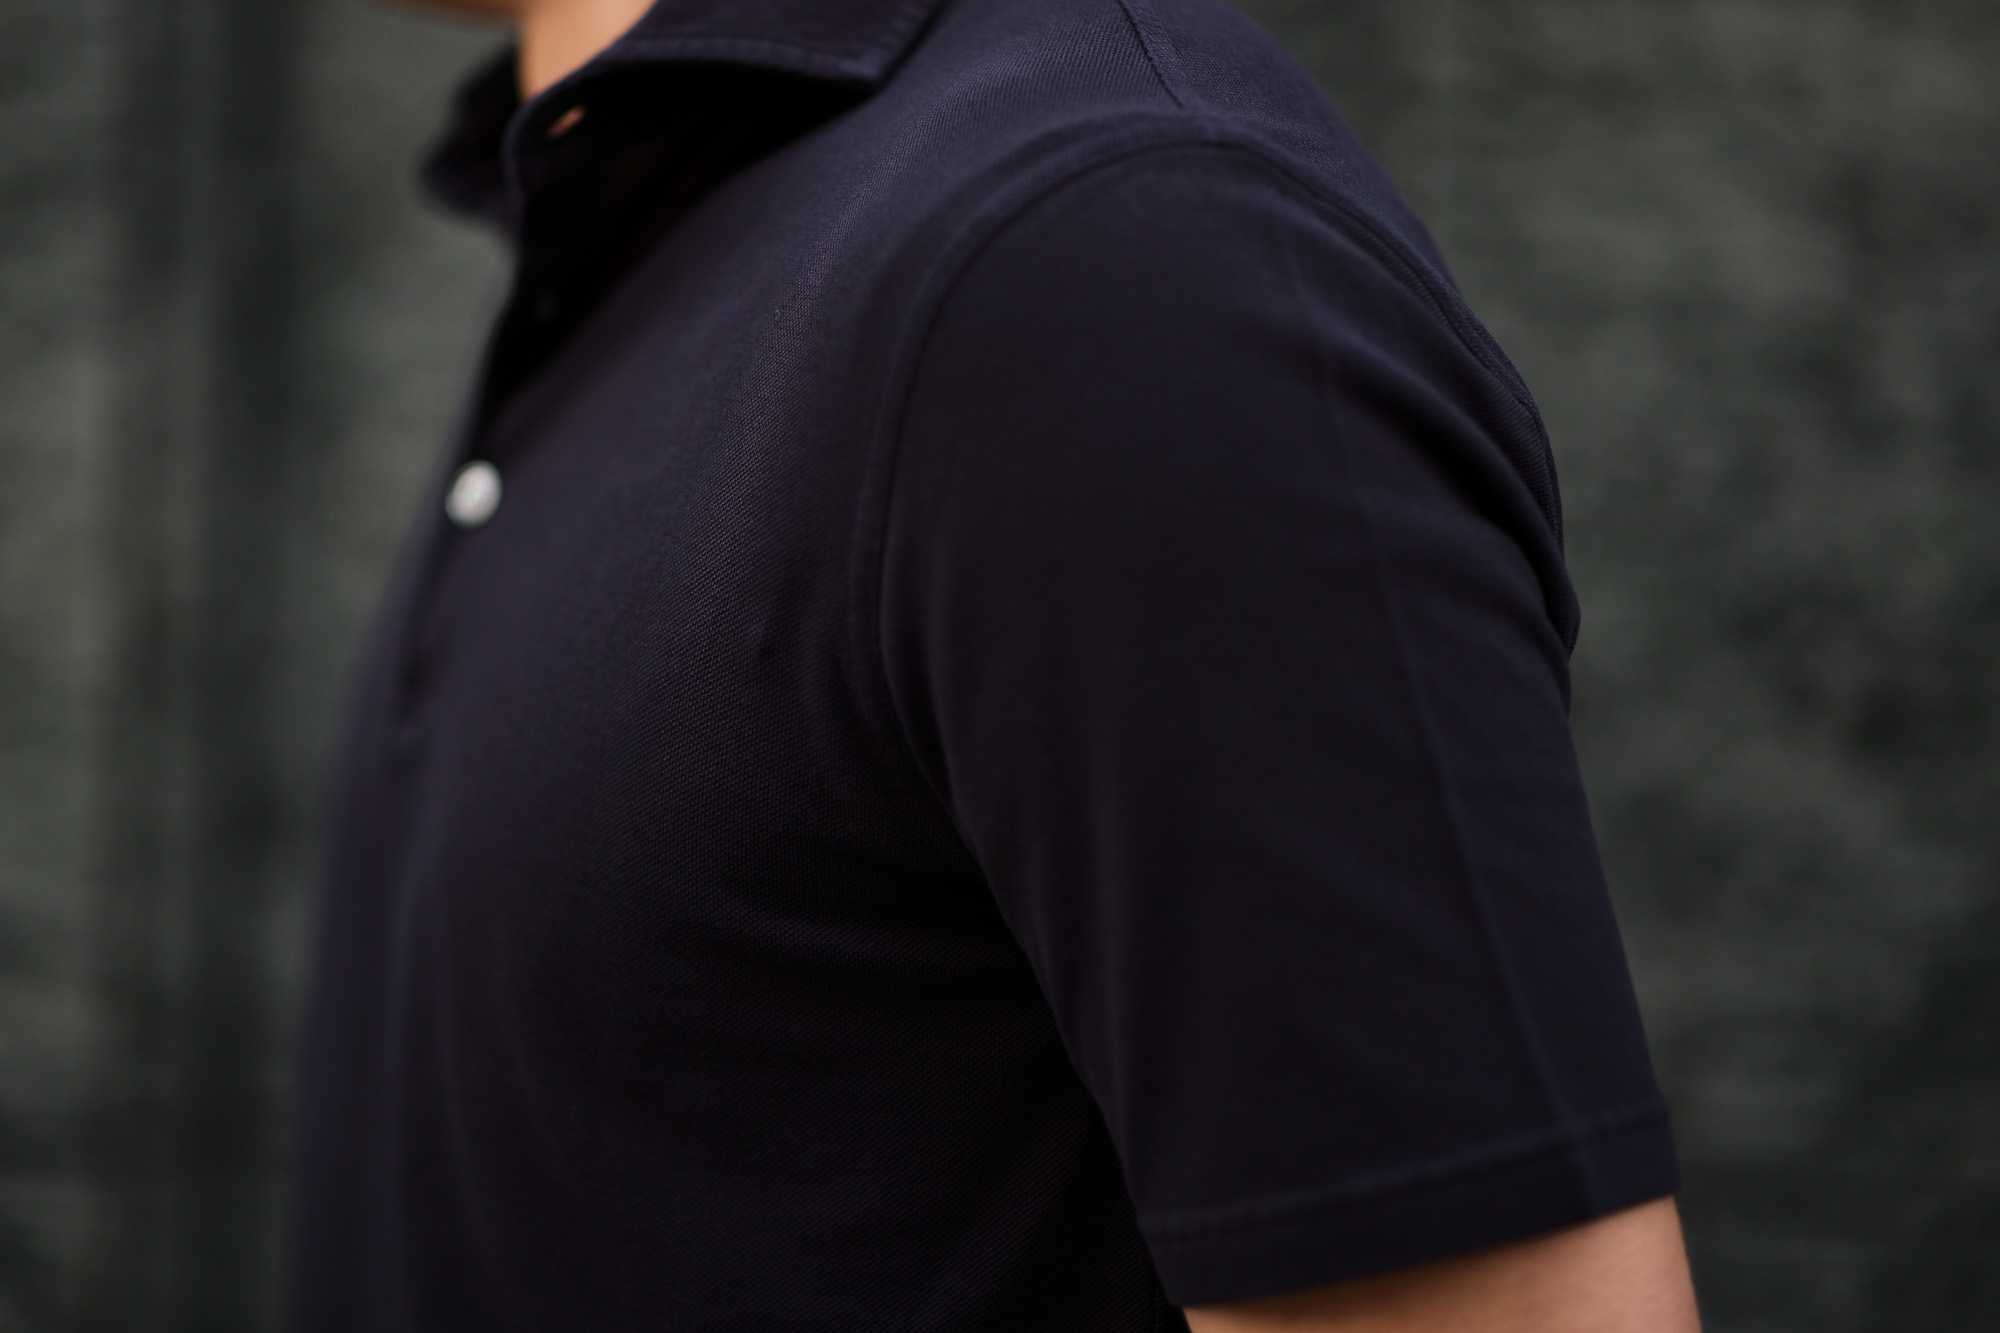 FEDELI(フェデーリ) Piquet Polo Shirt (ピケ ポロシャツ) カノコ ポロシャツ NAVY (ネイビー・626) made in italy (イタリア製)2020 春夏新作 愛知 名古屋 altoediritto アルトエデリット ポロ